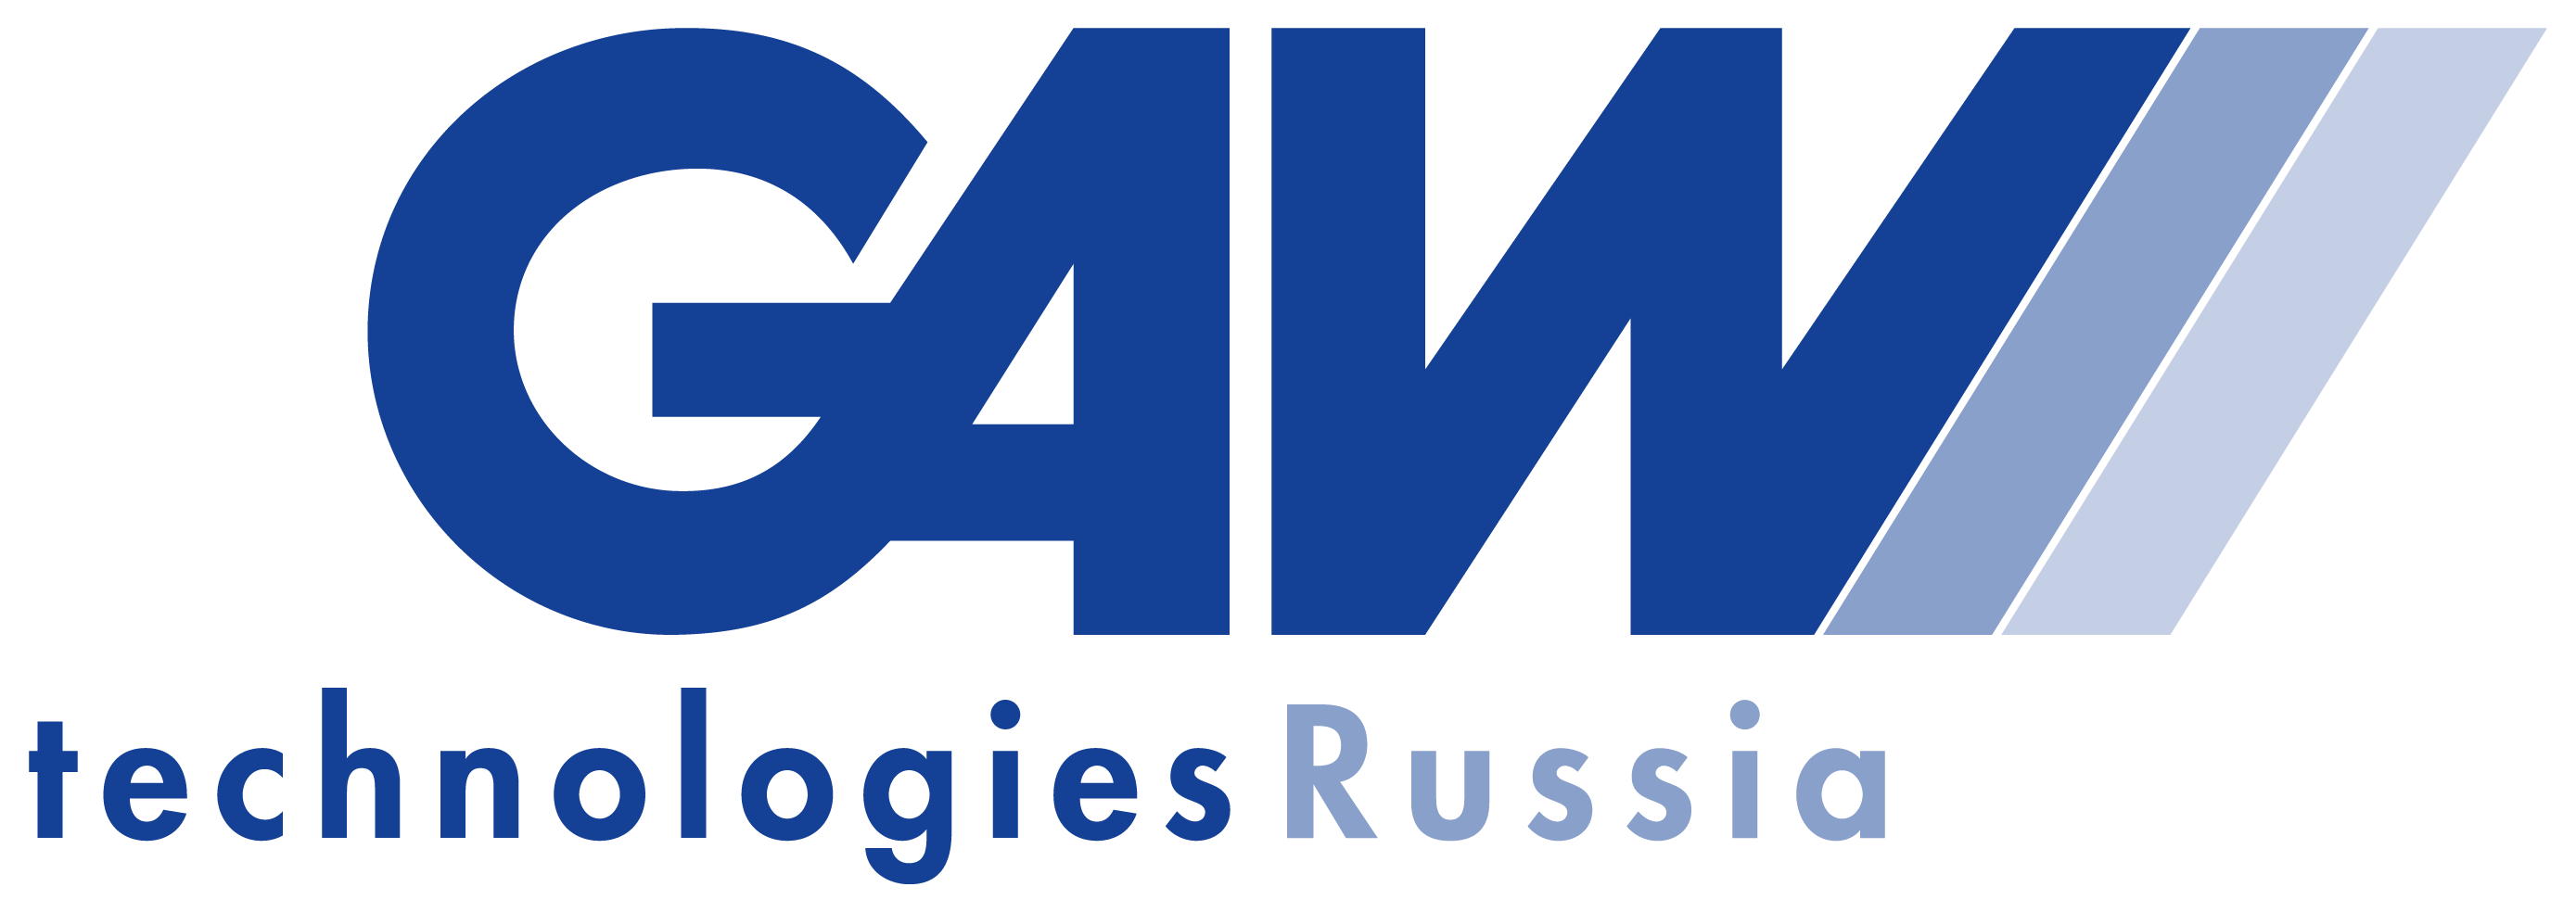 GAW Group technologies subsidiary Russia Logo RGB